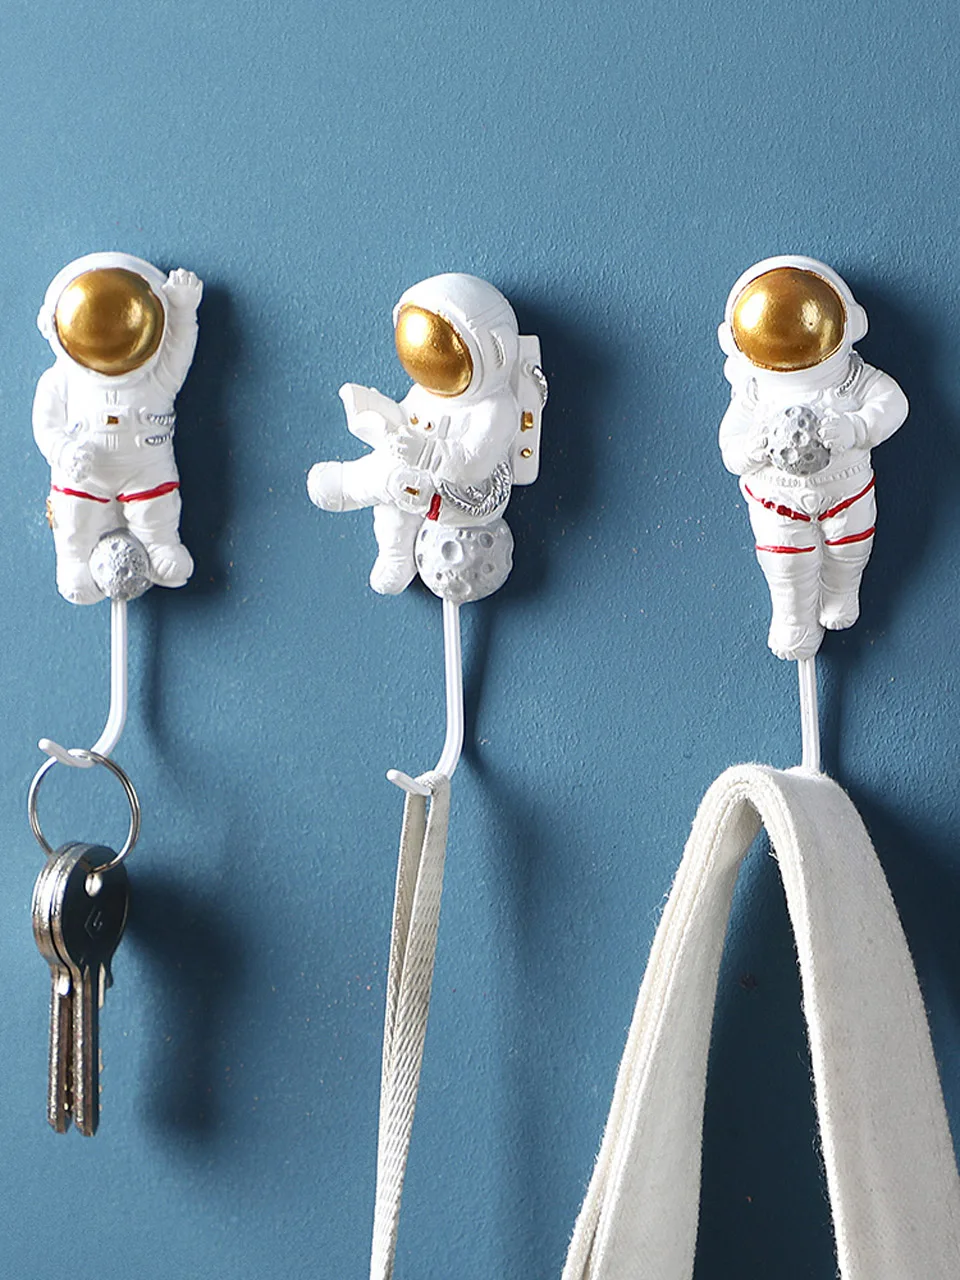 

Creative Cartoon Happy Planet Astronaut Model Hooks Kitchen Strong Glue Nail-Free Door Behind Bedroom Study Decoration Wall Hook